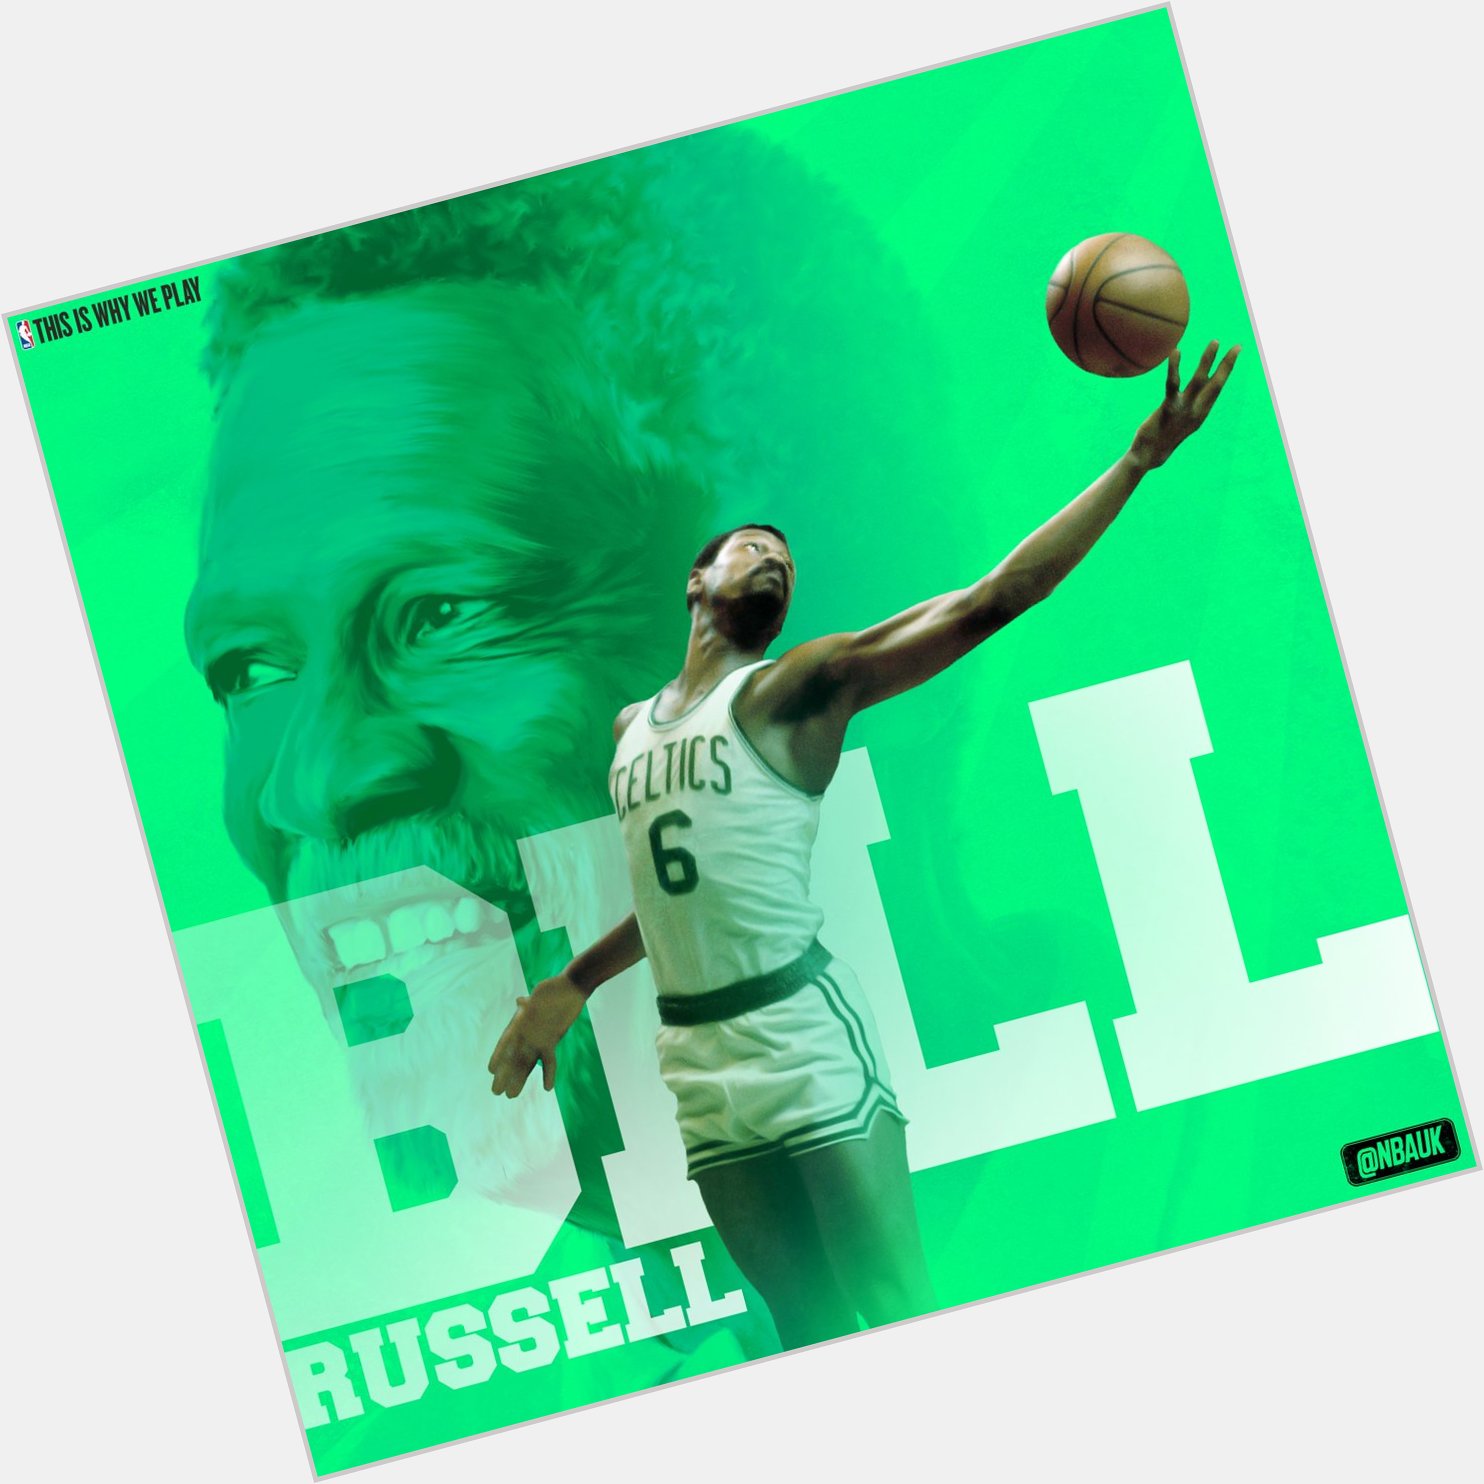 Happy birthday Bill Russell! 